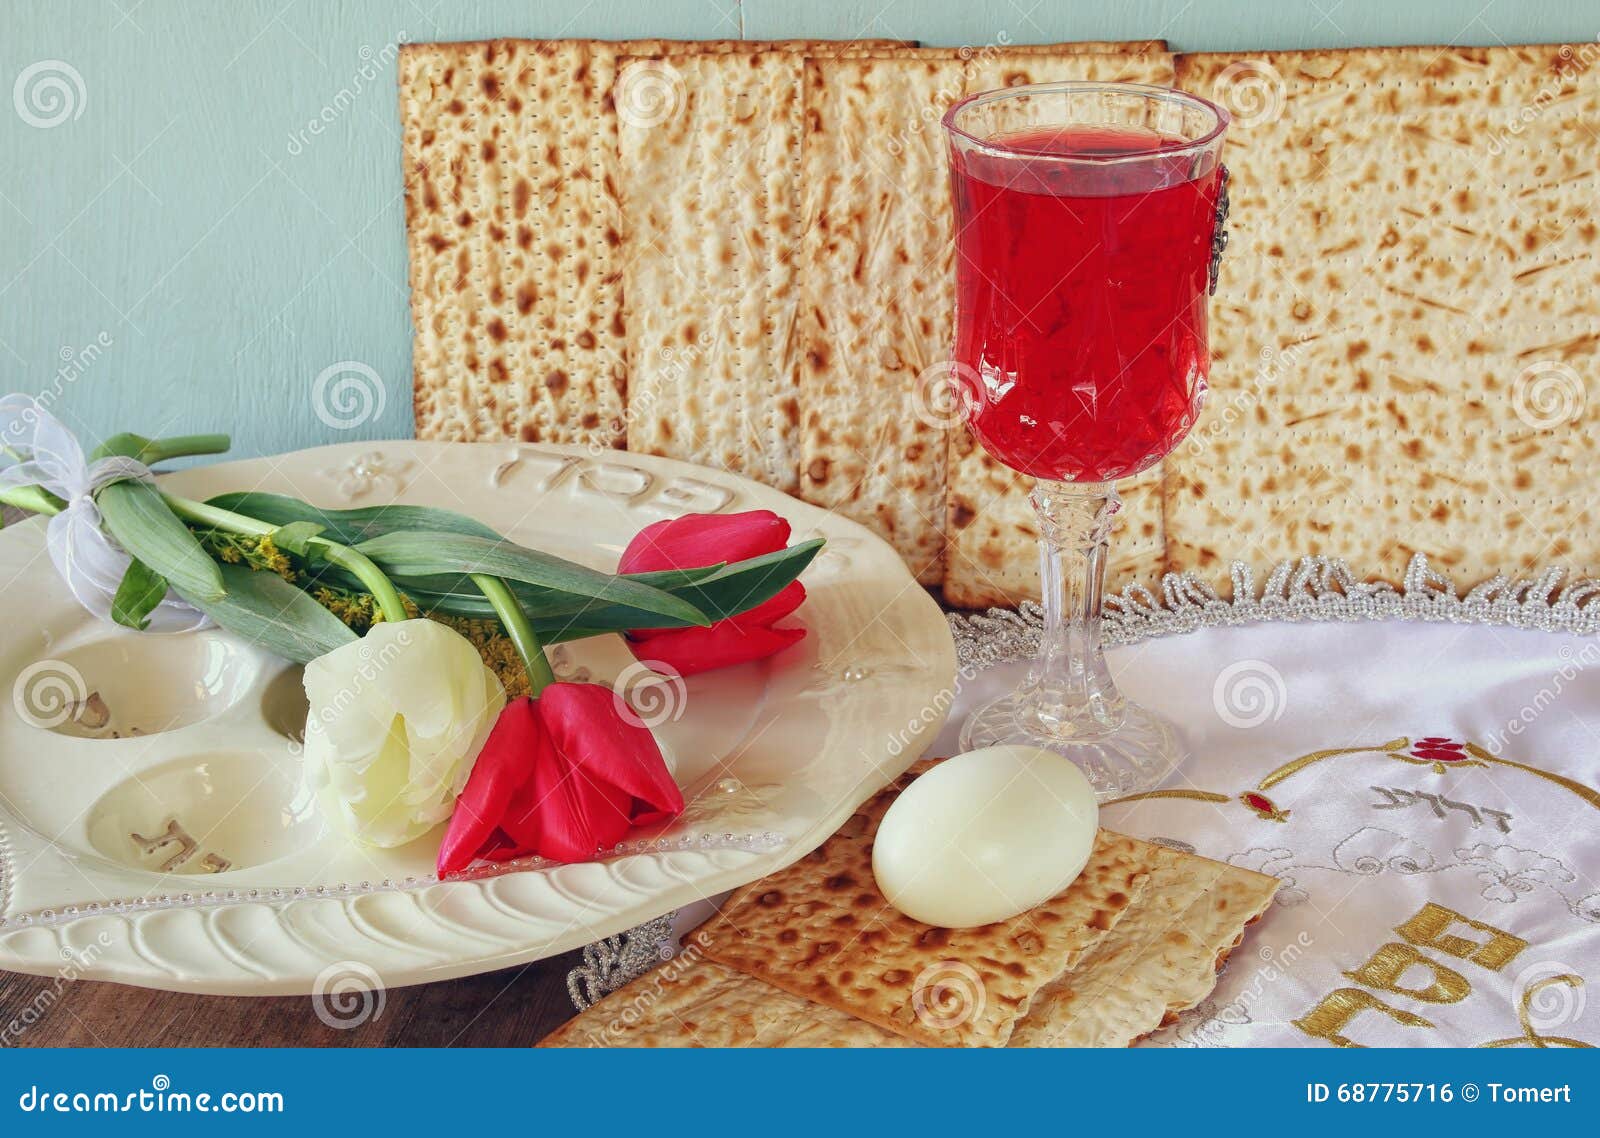 Pesah Celebration Concept (jewish Passover Holiday) Stock Photo - Image ...